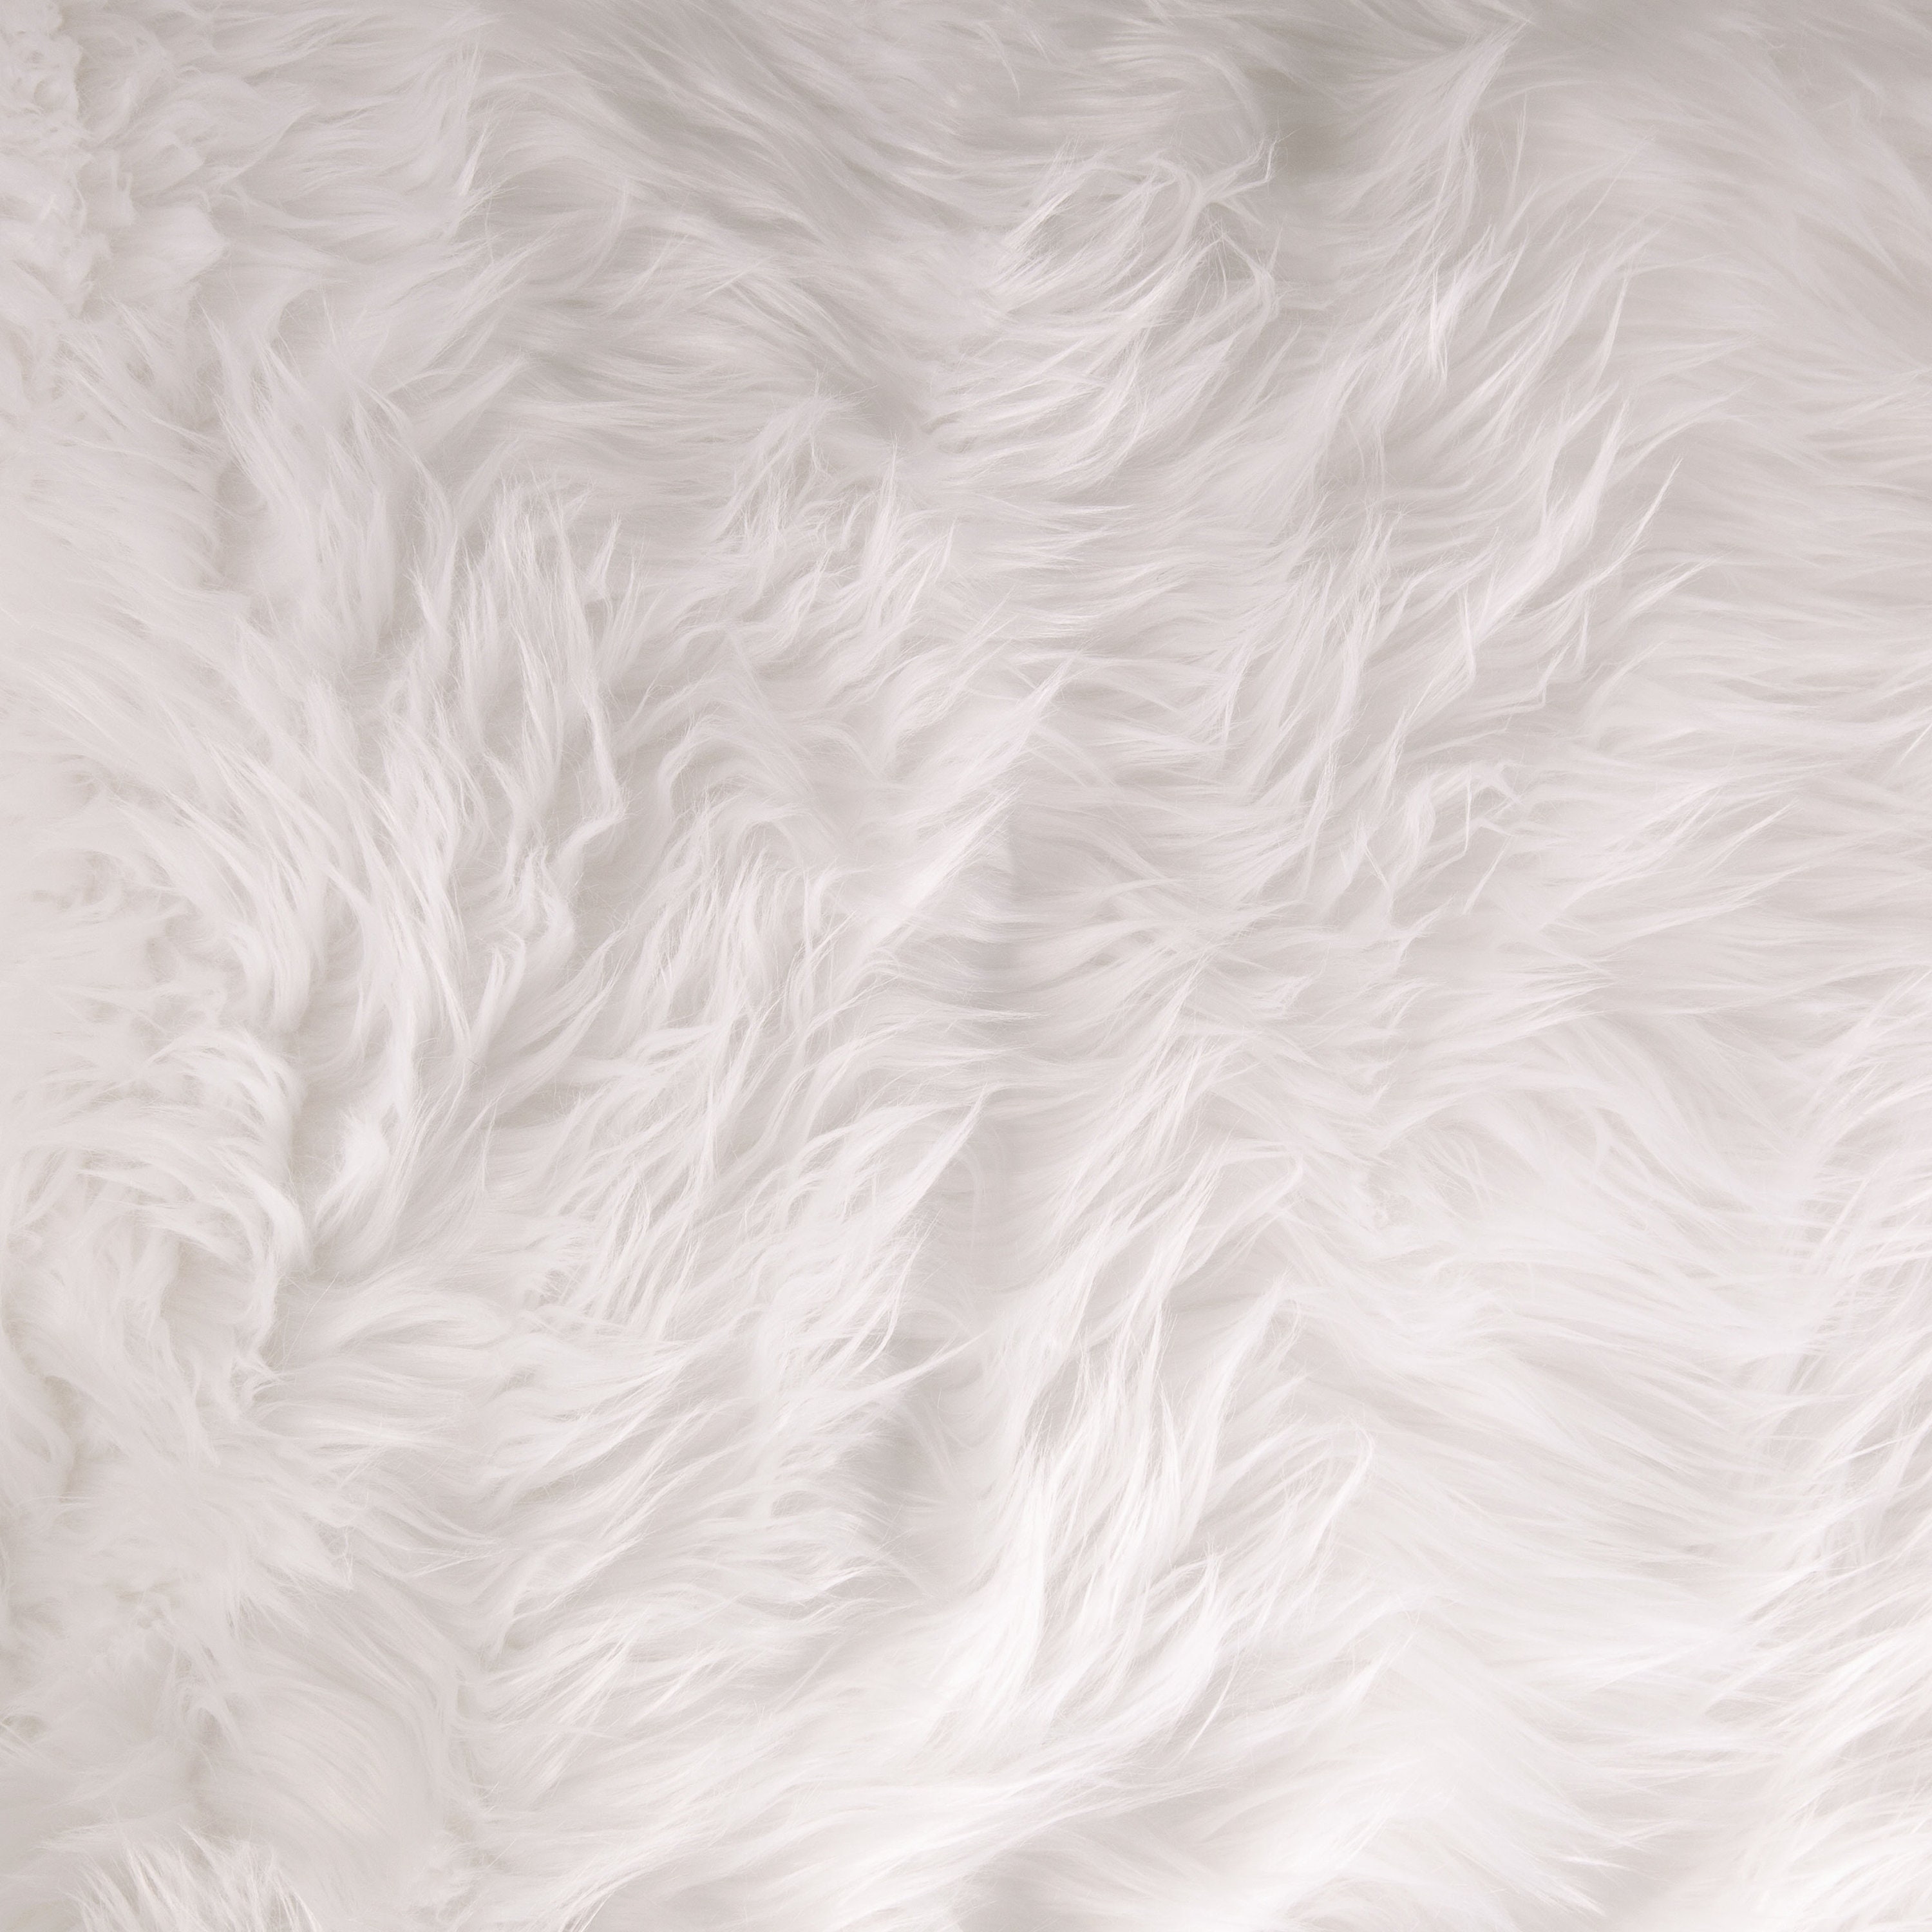 Buy Wholesale China 100% Polyester Sheared Plush Fur Fabric